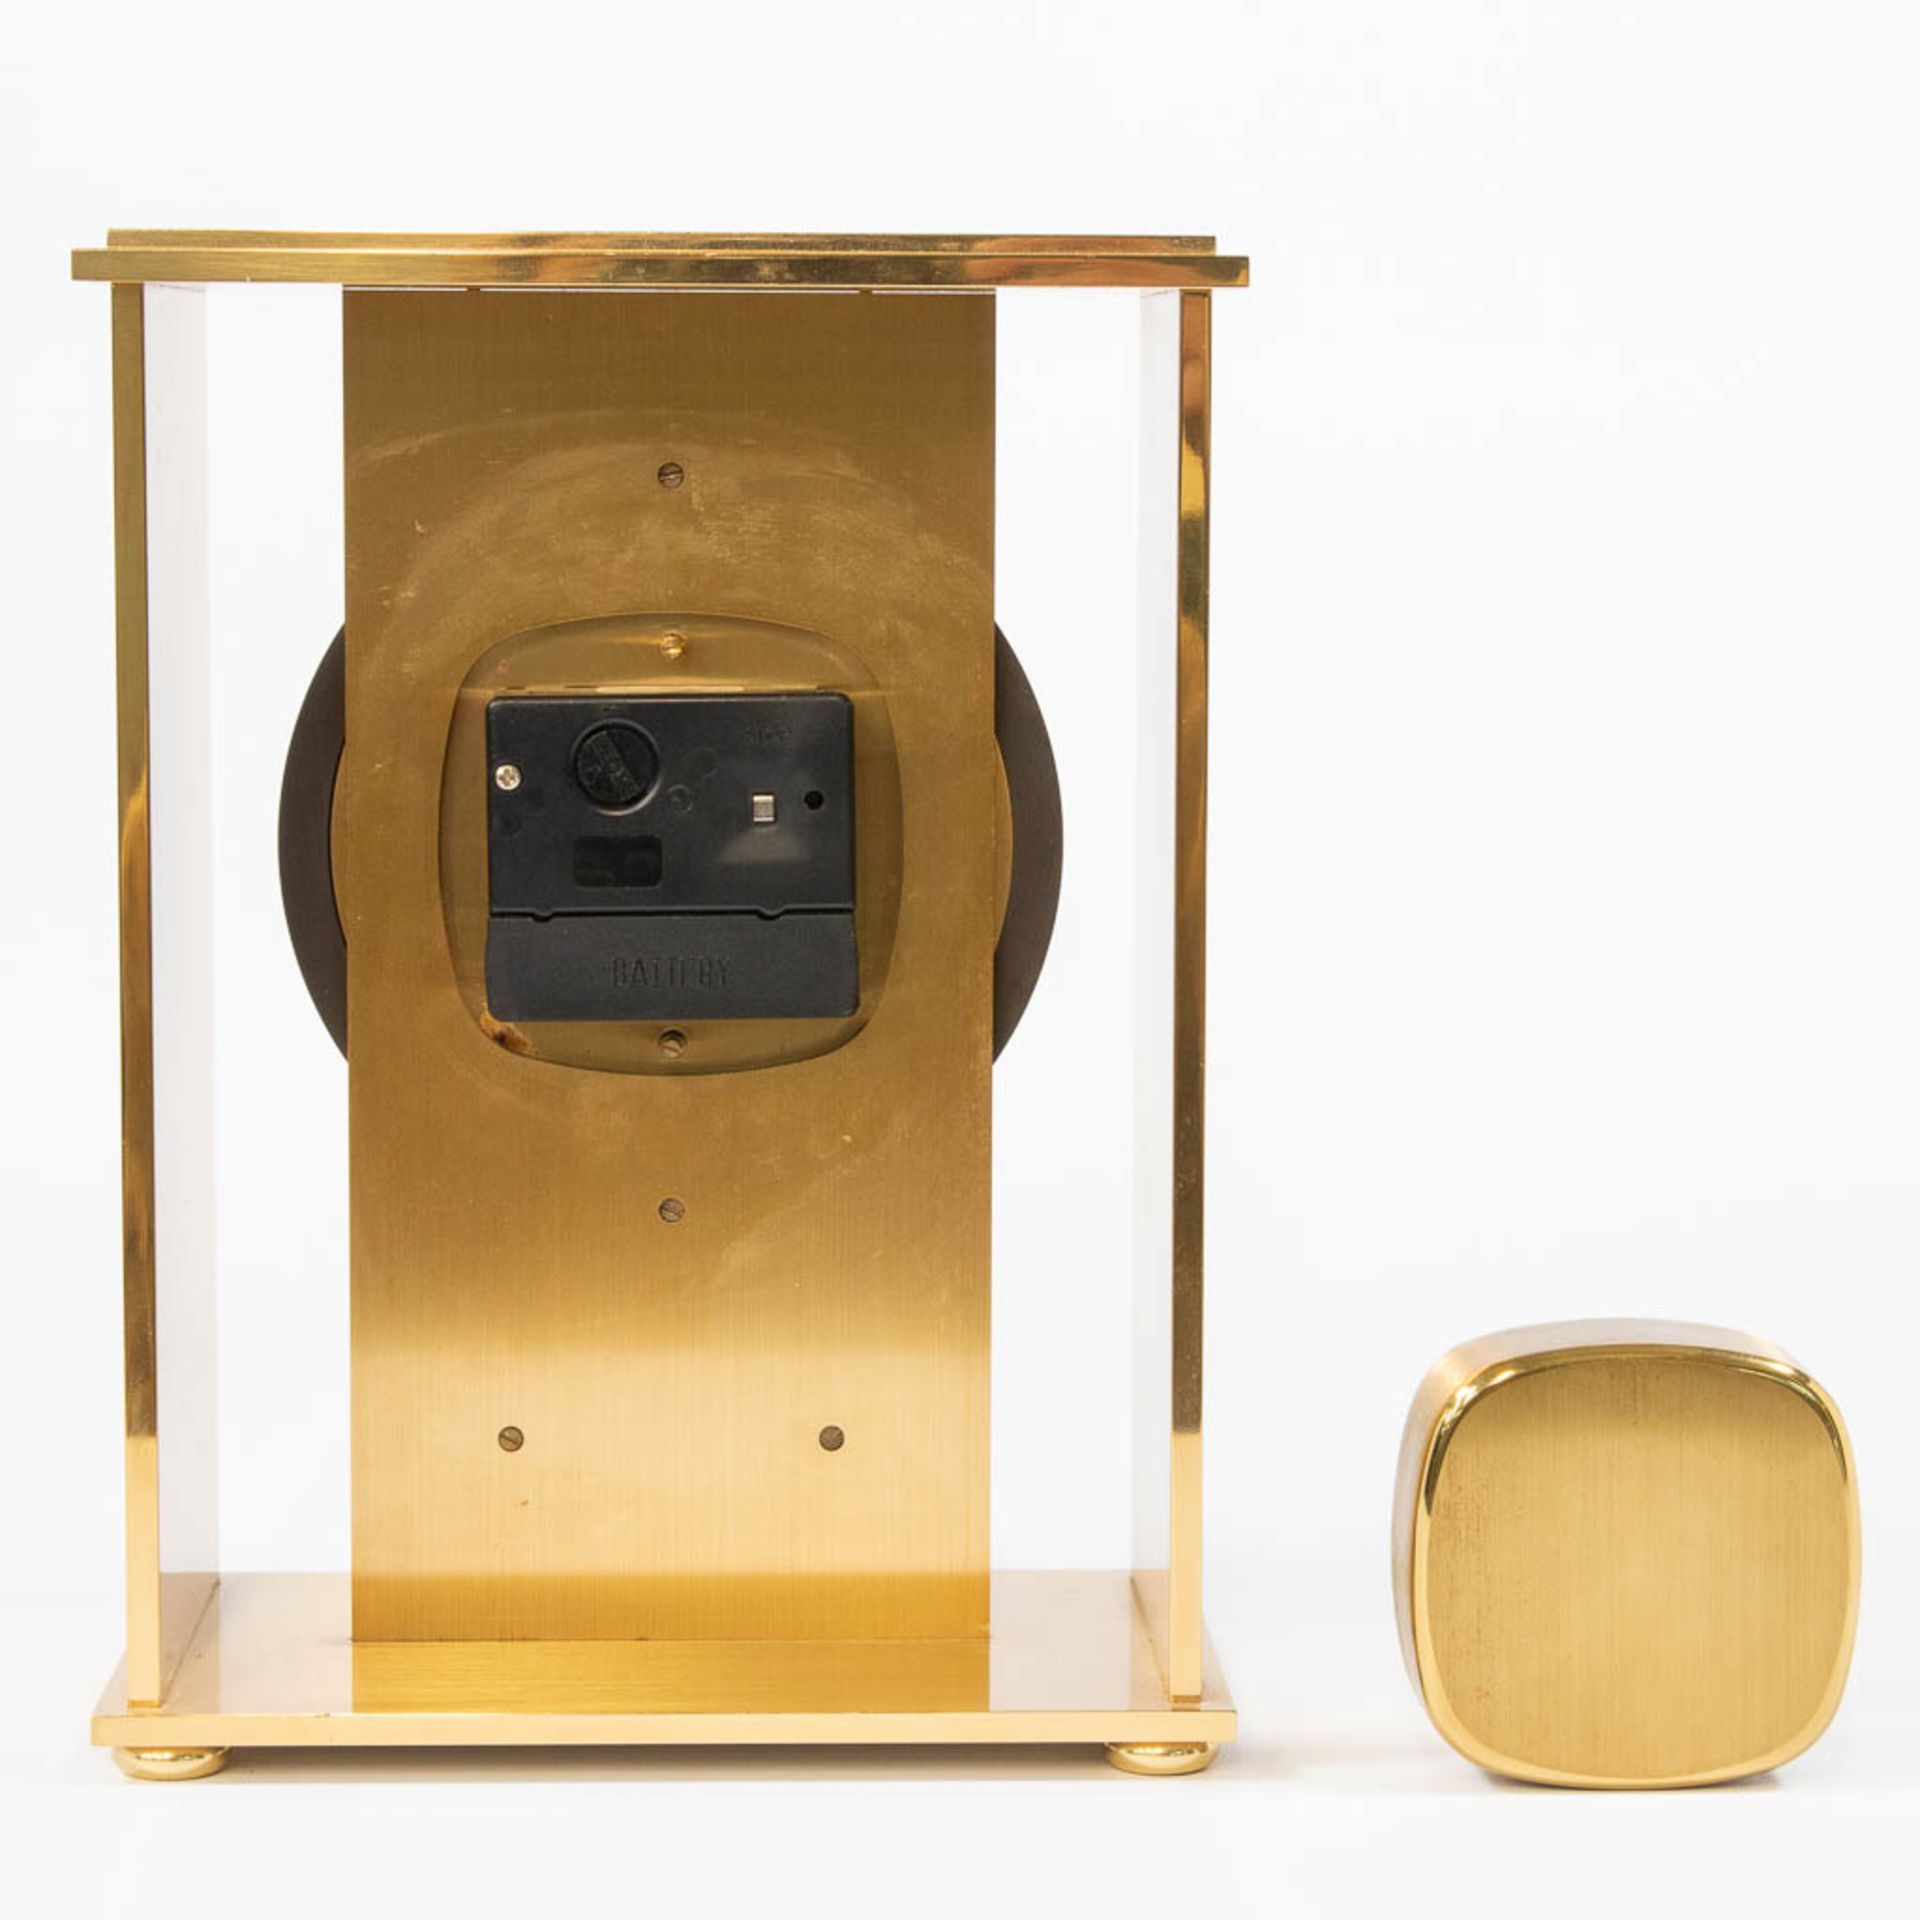 A Swiss made Swiza Table clock, made of Brass with a Quartz battery movement - Bild 4 aus 14